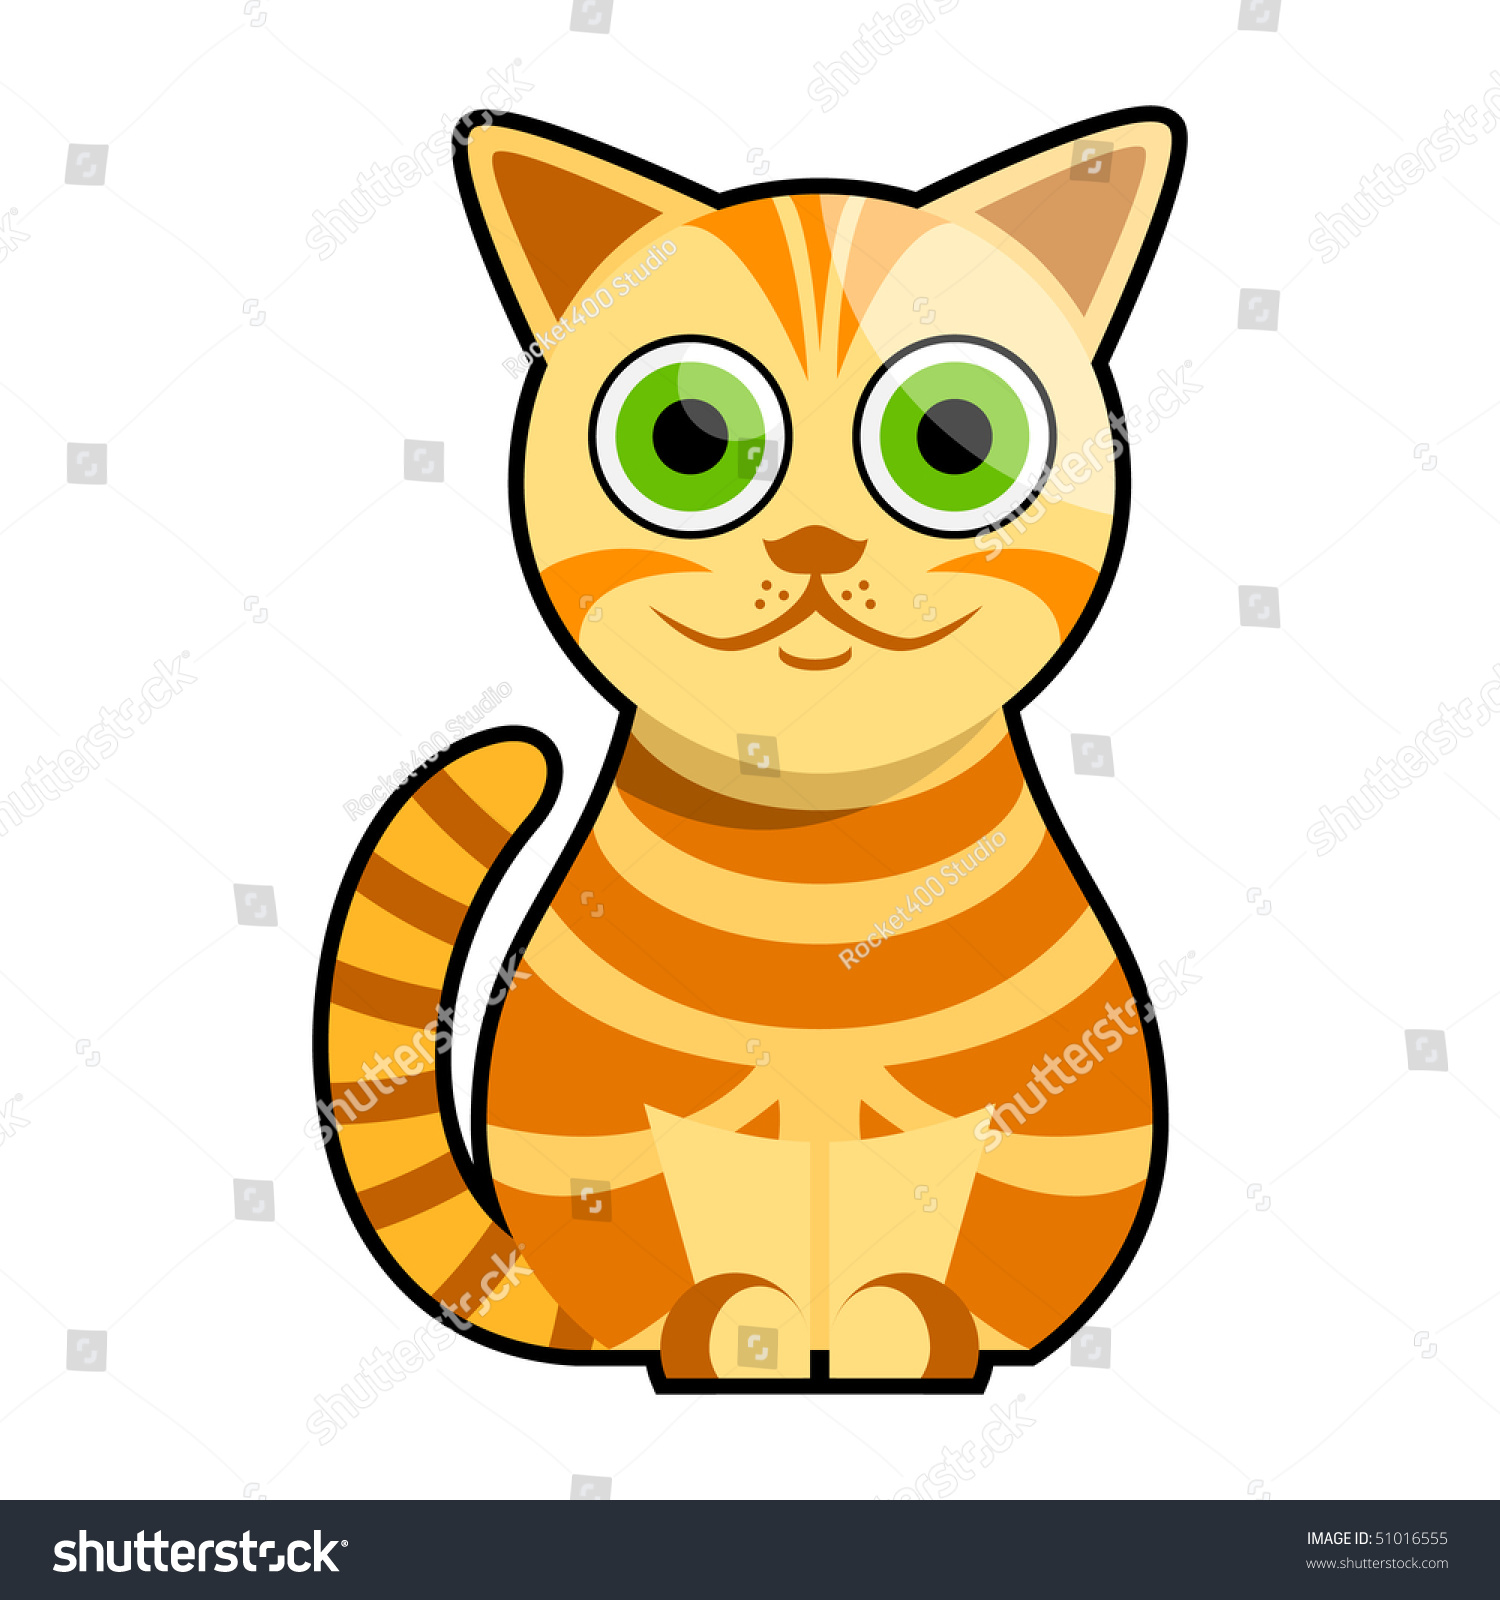 Cute Cat Illustration - 51016555 : Shutterstock